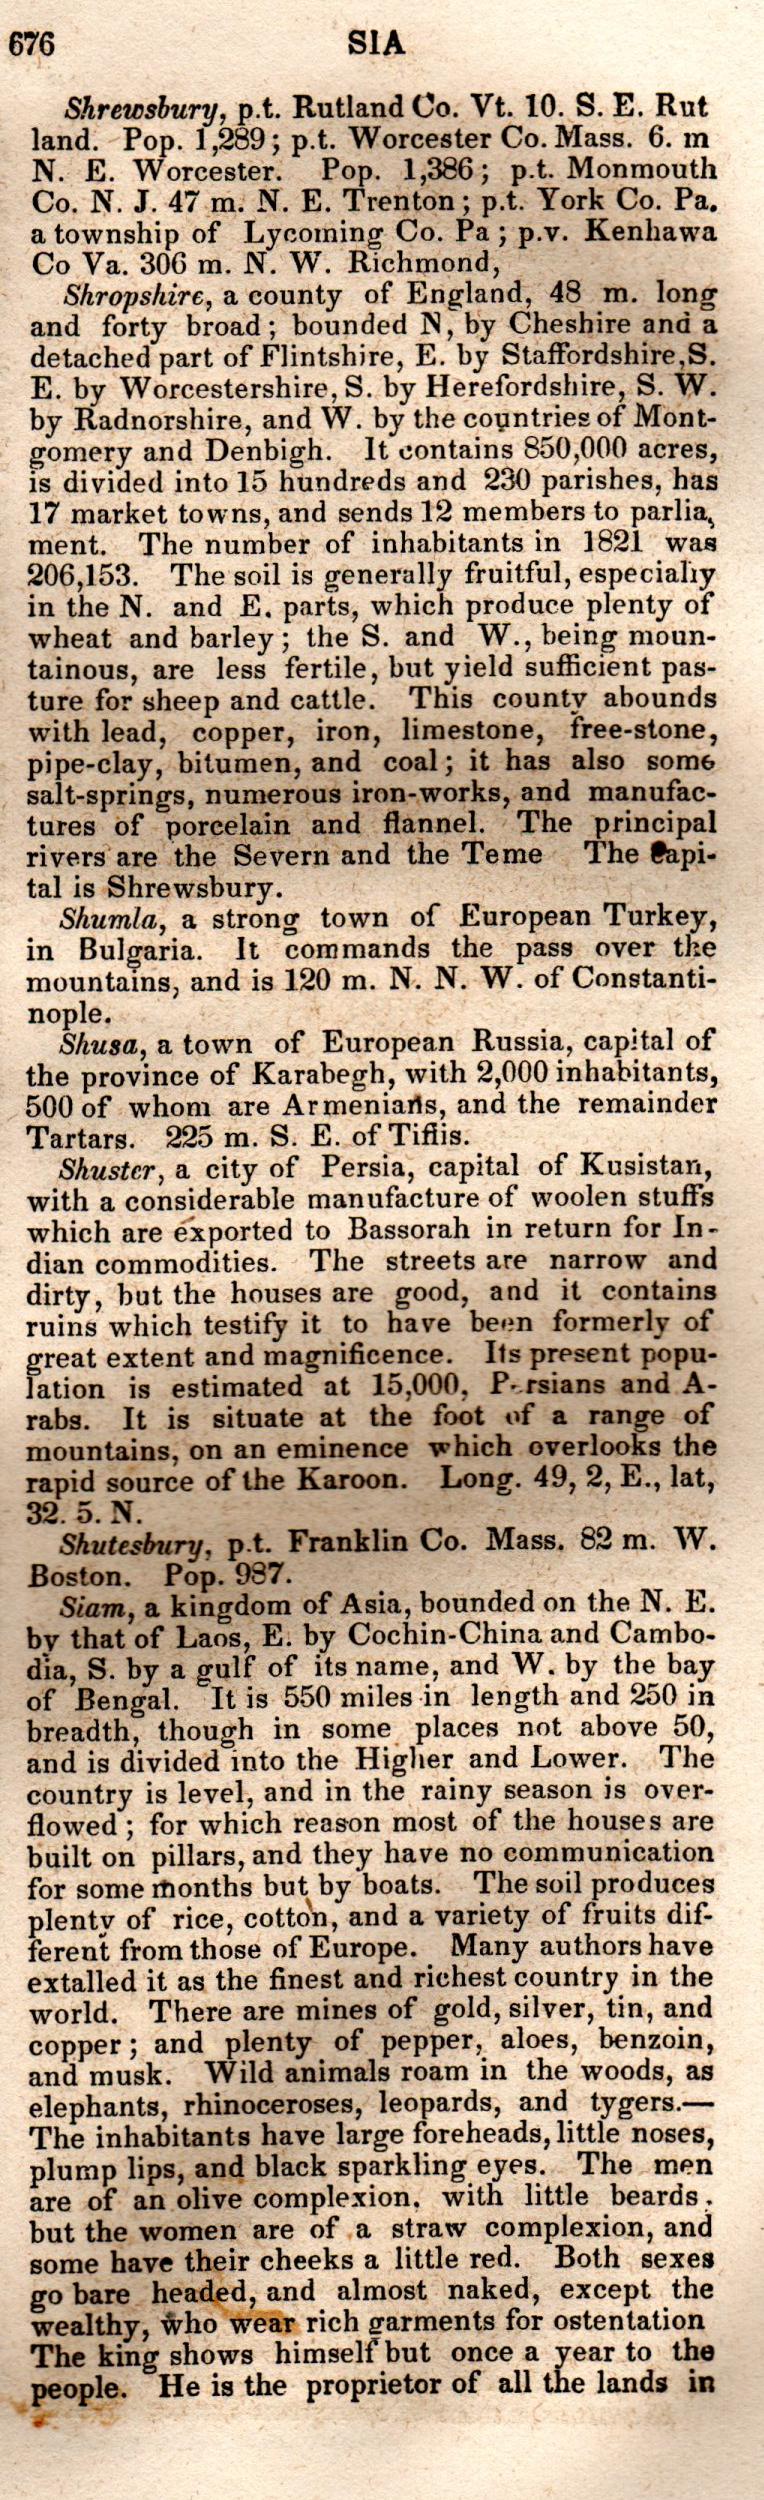 Brookes’ Universal Gazetteer (1850), Page 676 Right Column